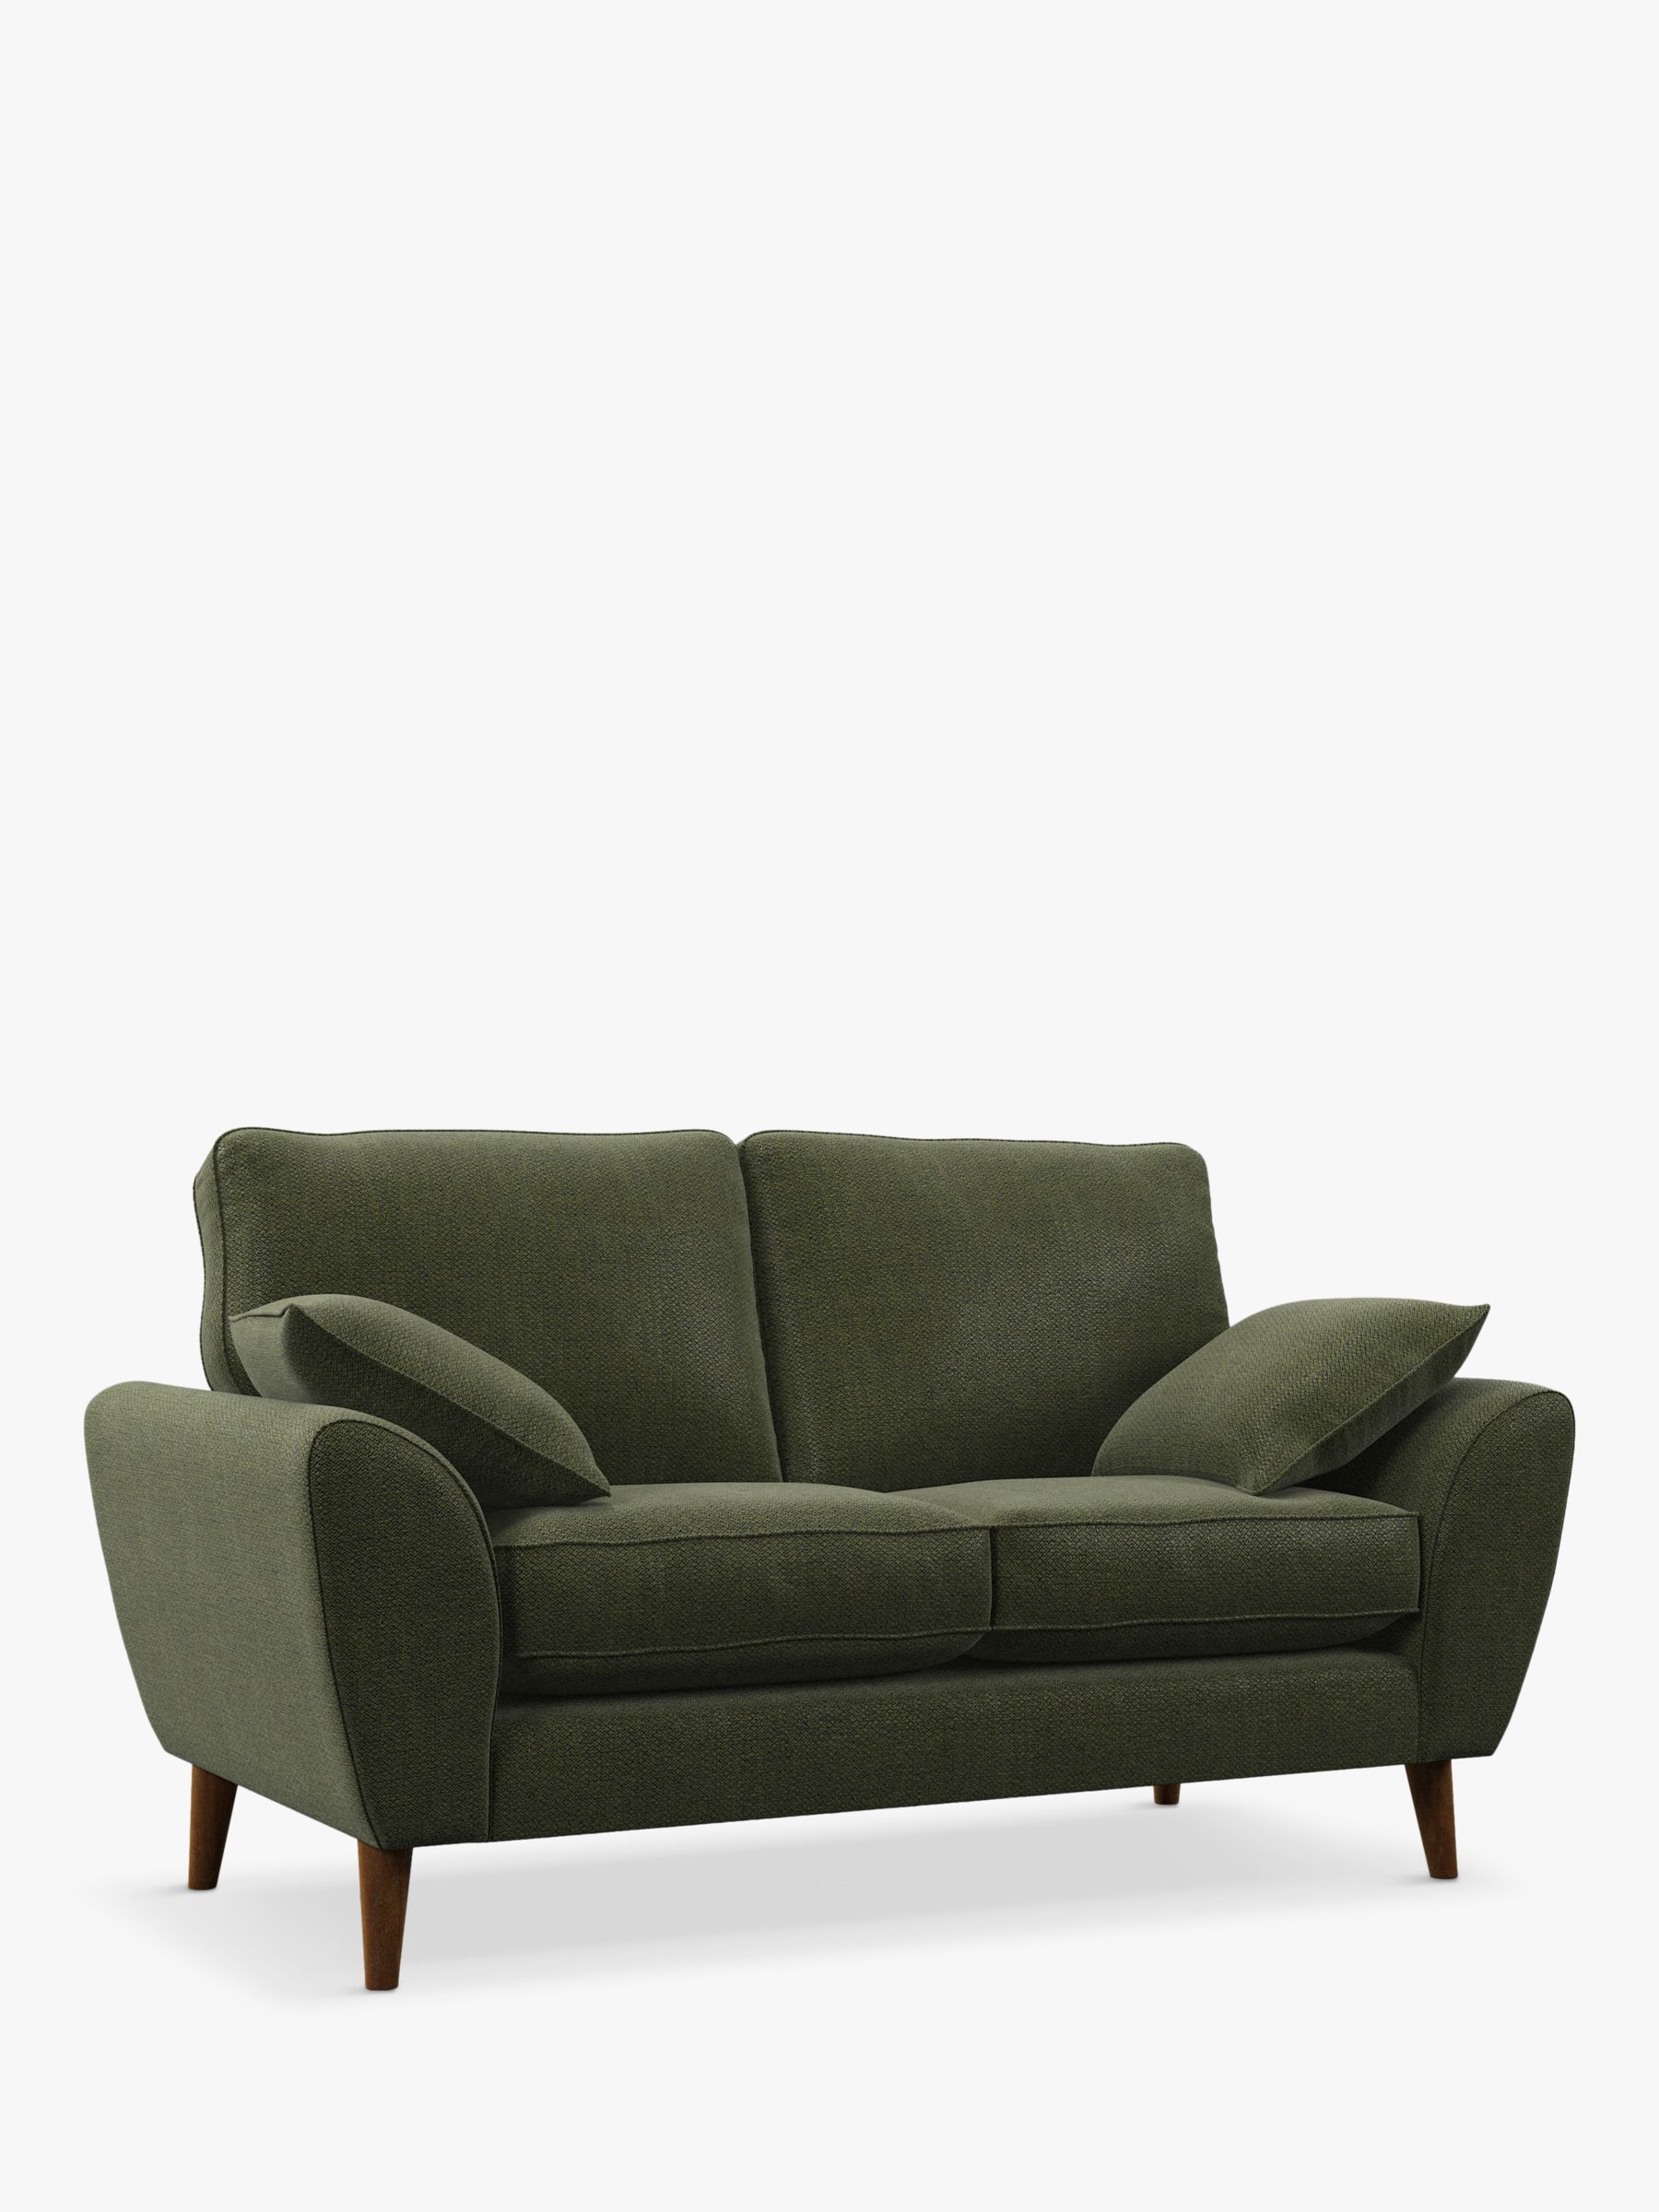 AMBLESIDE Range, John Lewis Ambleside Small 2 Seater Sofa, Dark Leg, Textured Weave Green